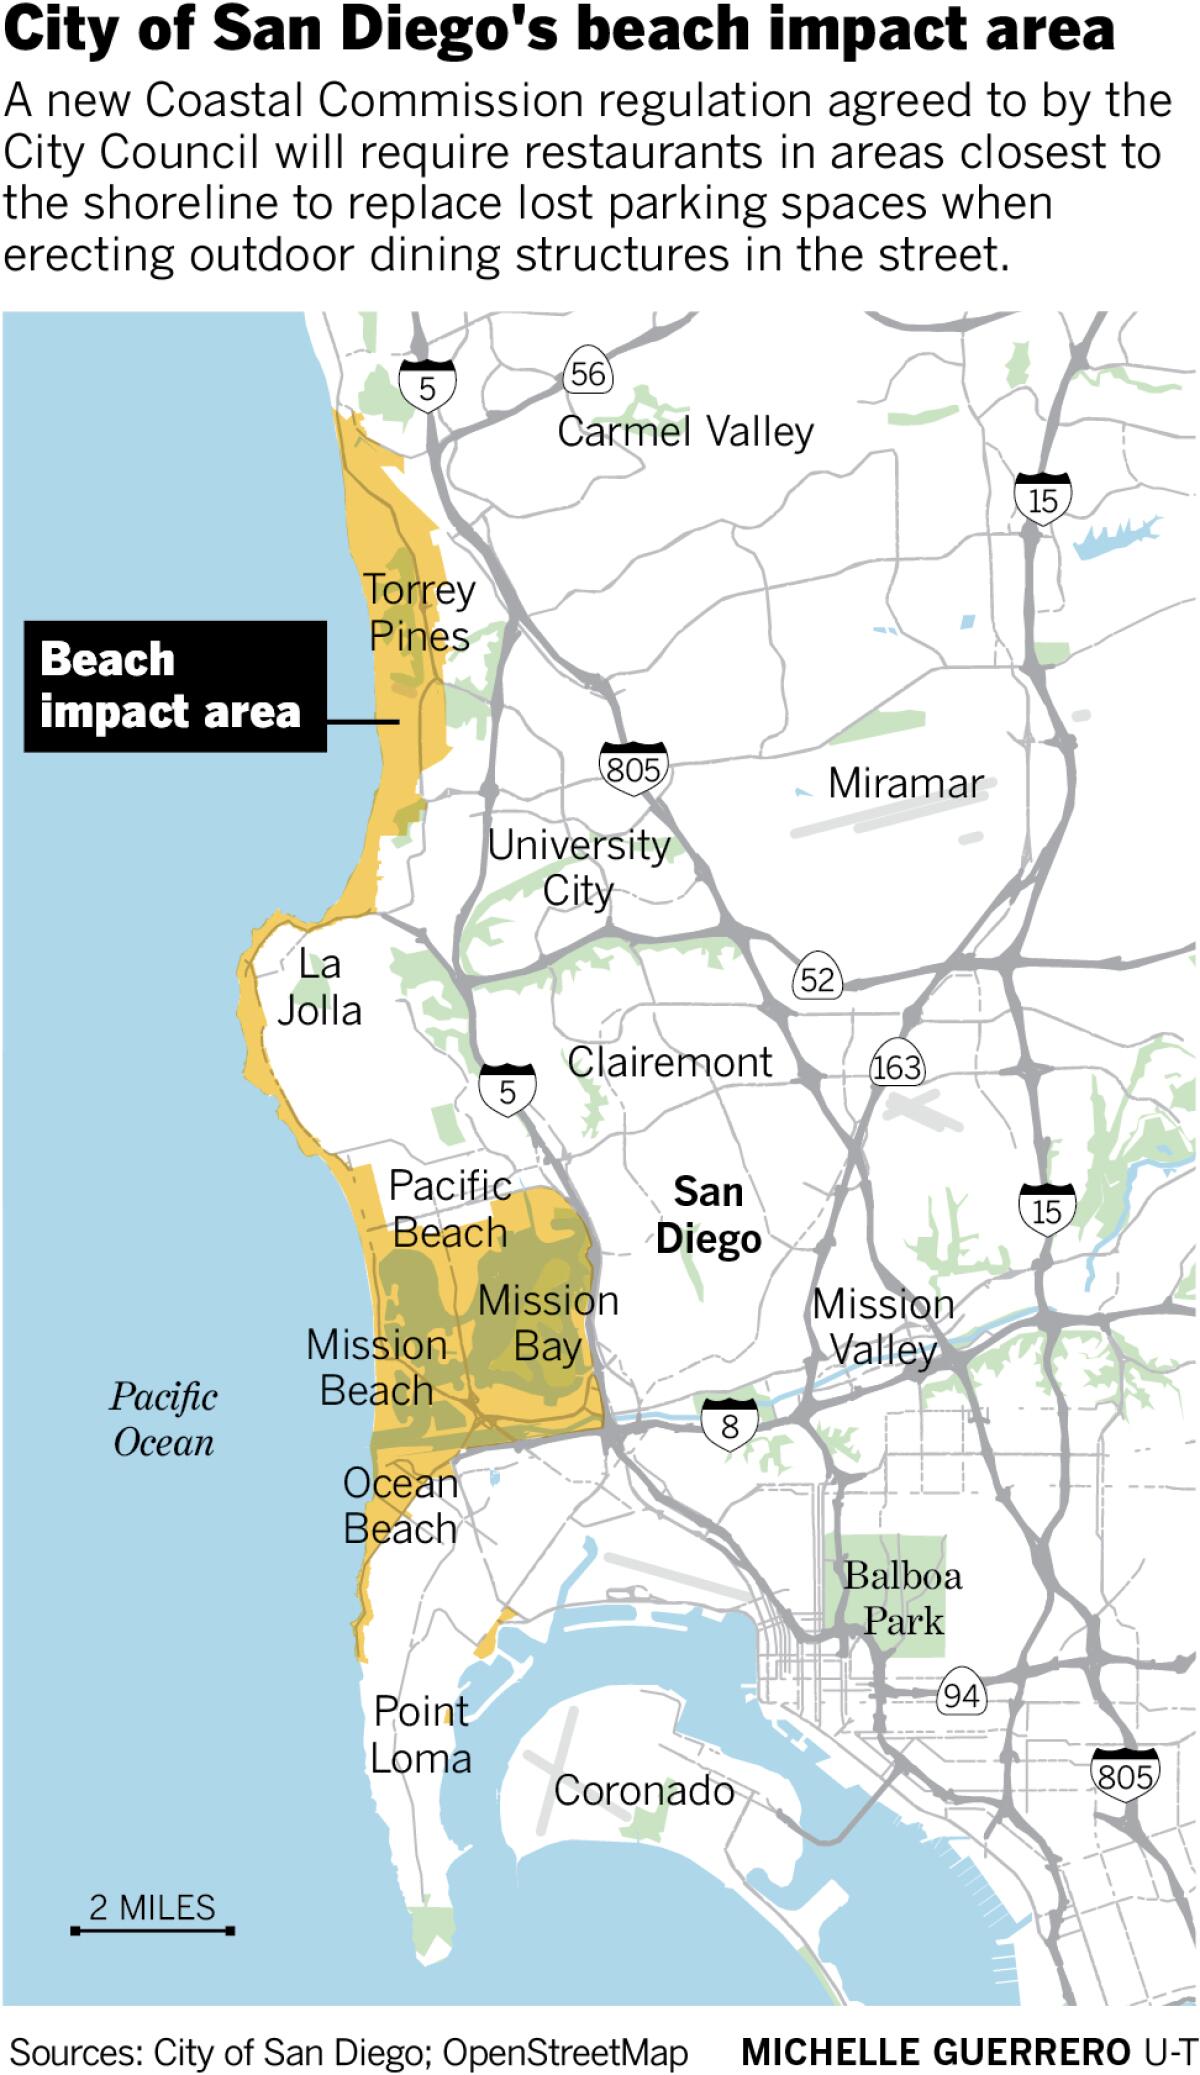 City of San Diego's beach impact area